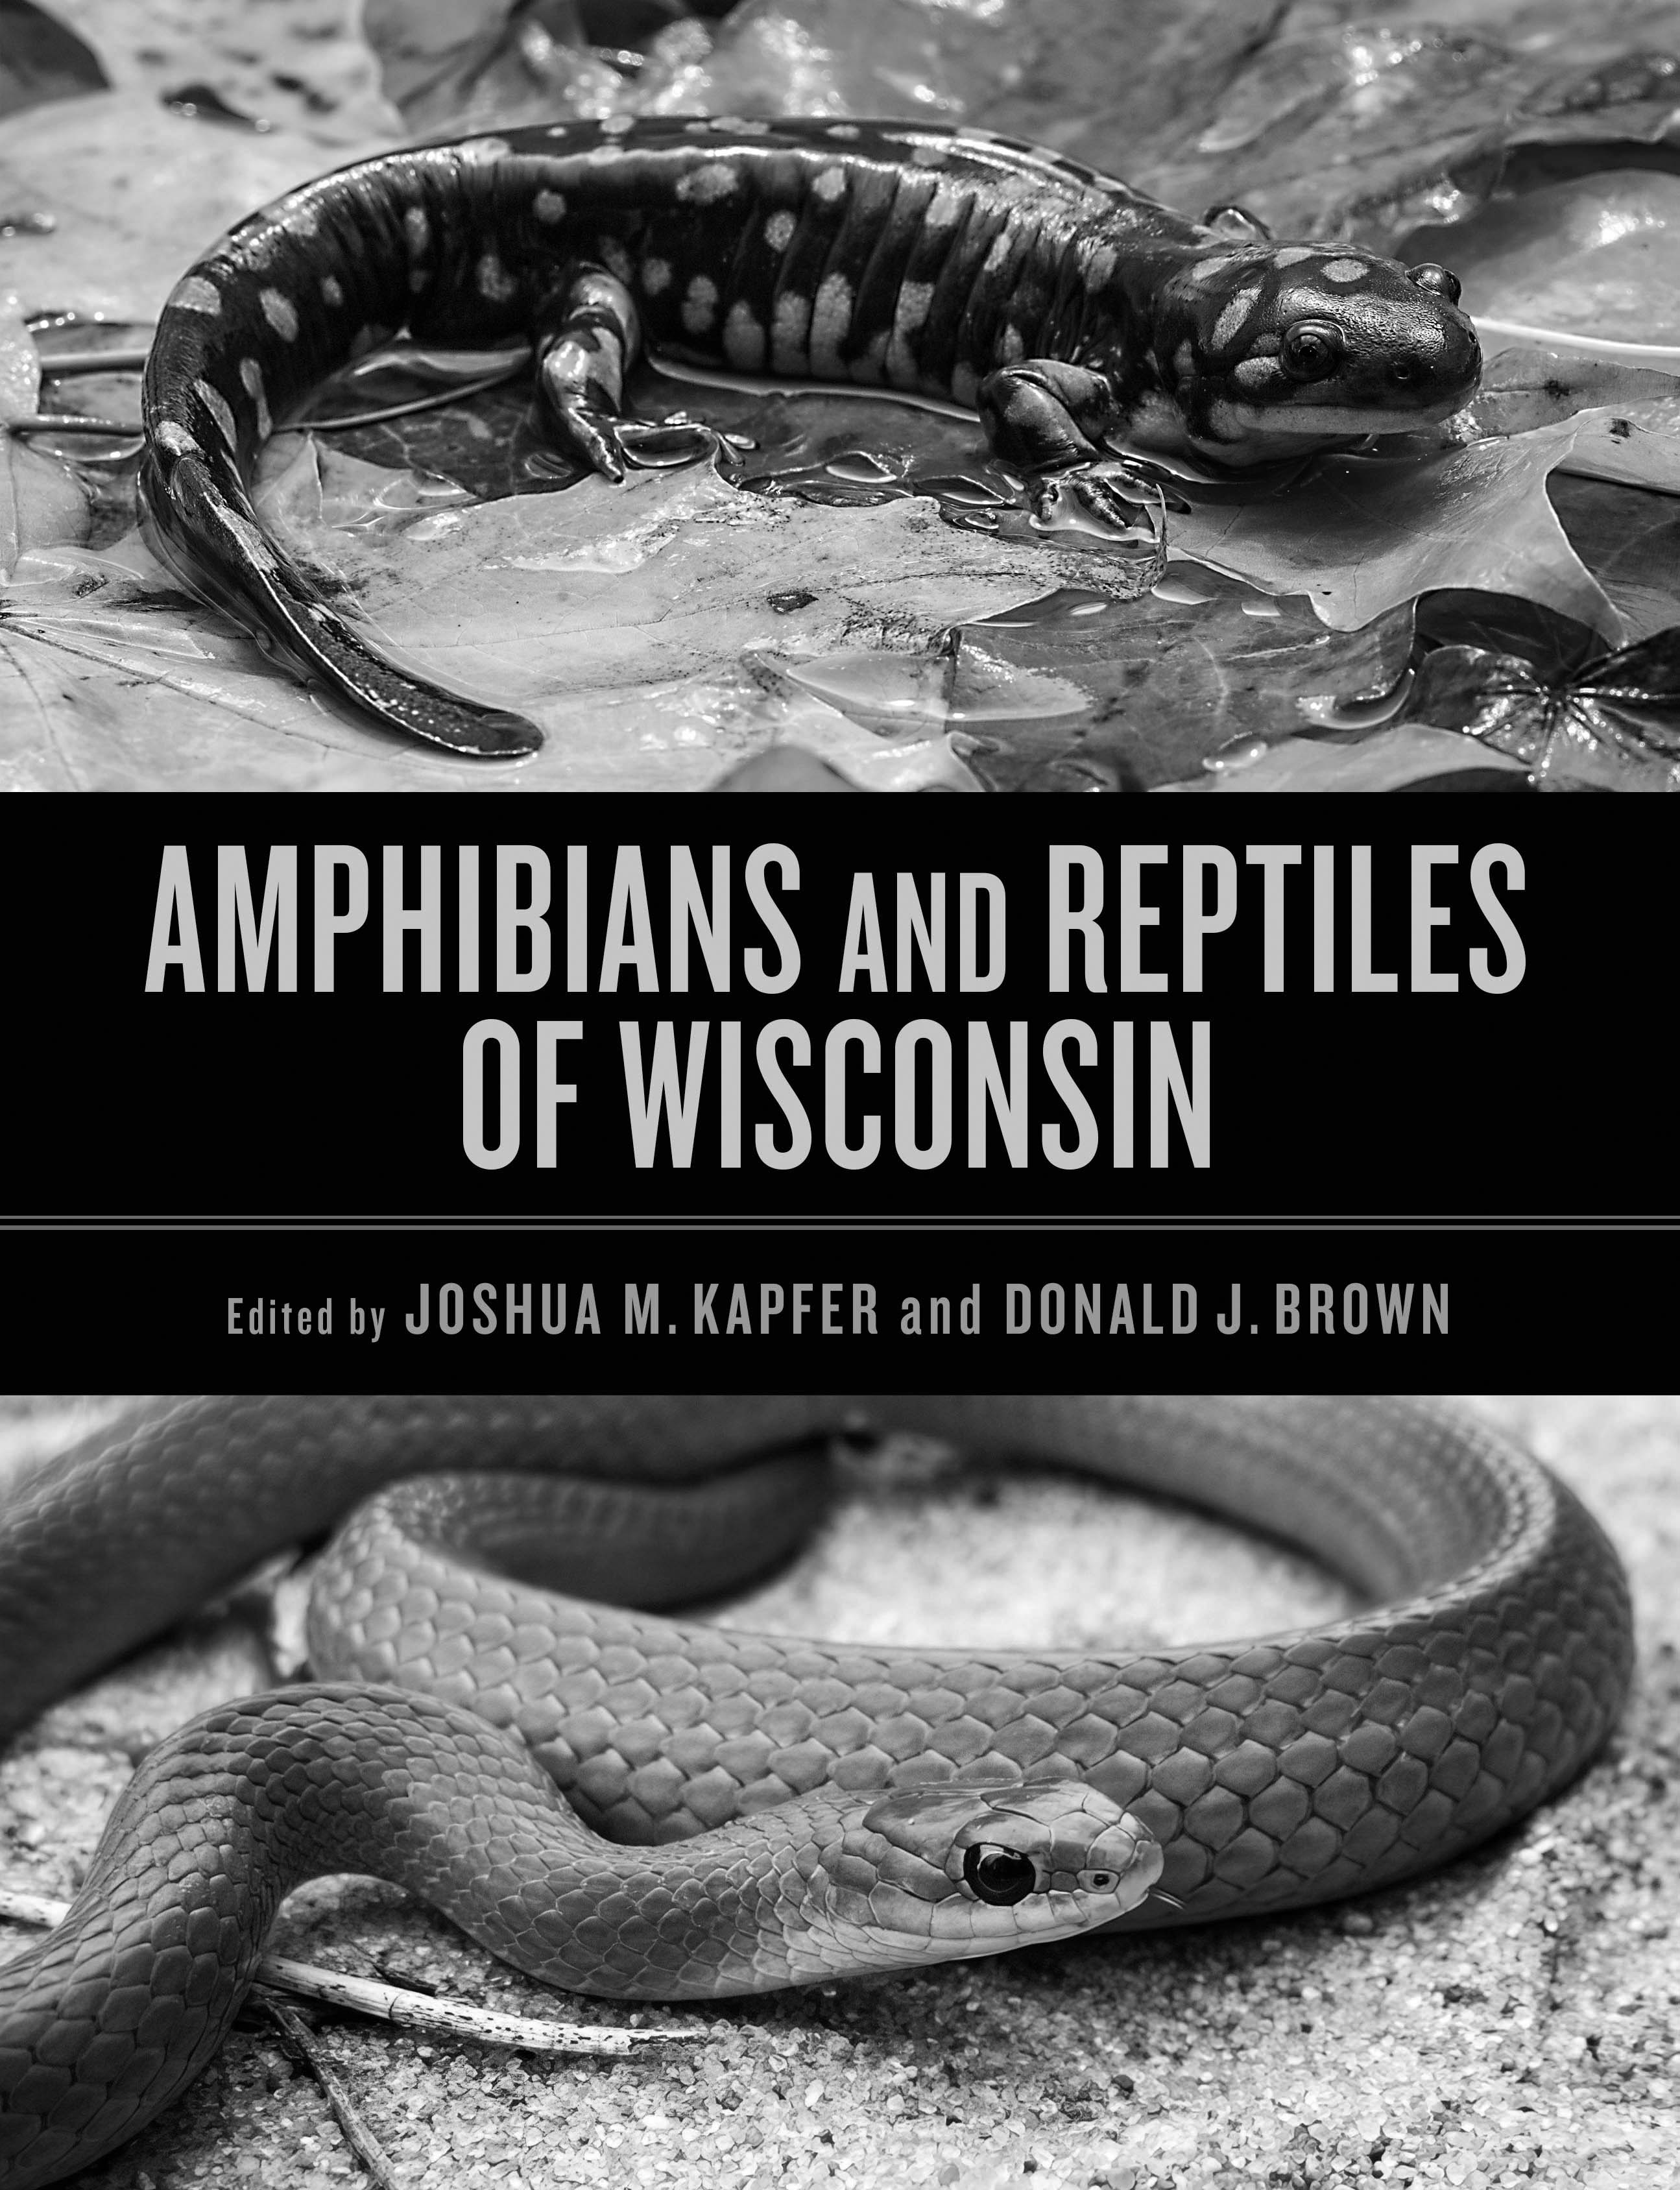 Amphibians & Reptiles, Animals